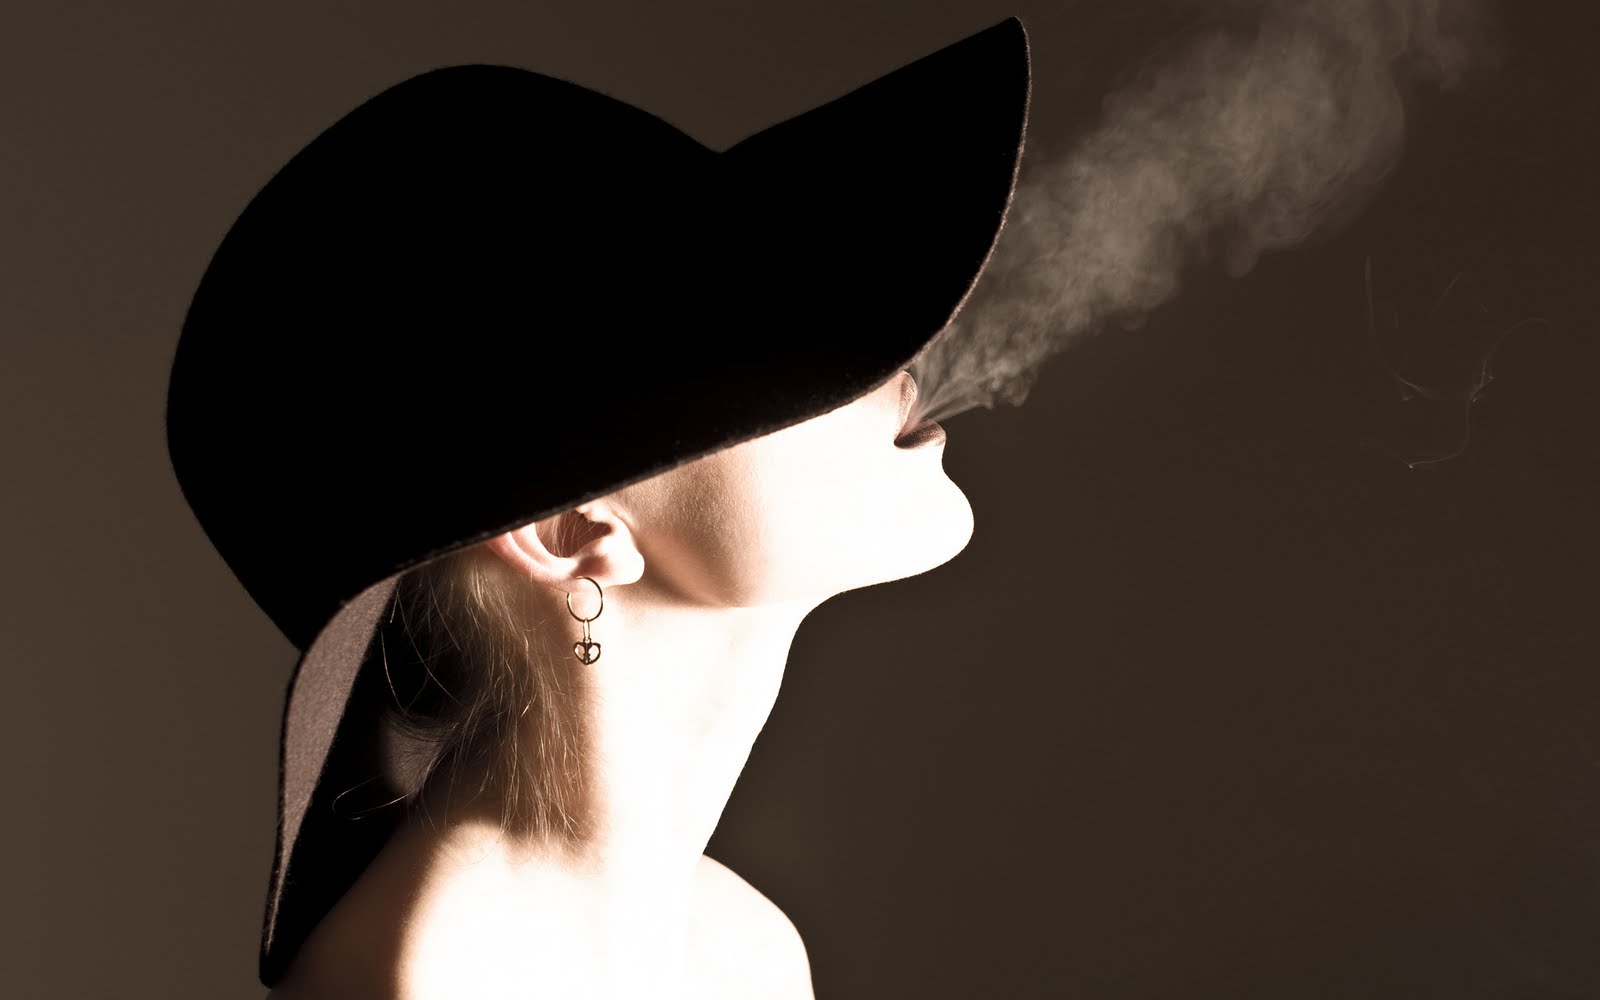  girl with cap smoking blowing smoke hd 2011 free download wallpapers